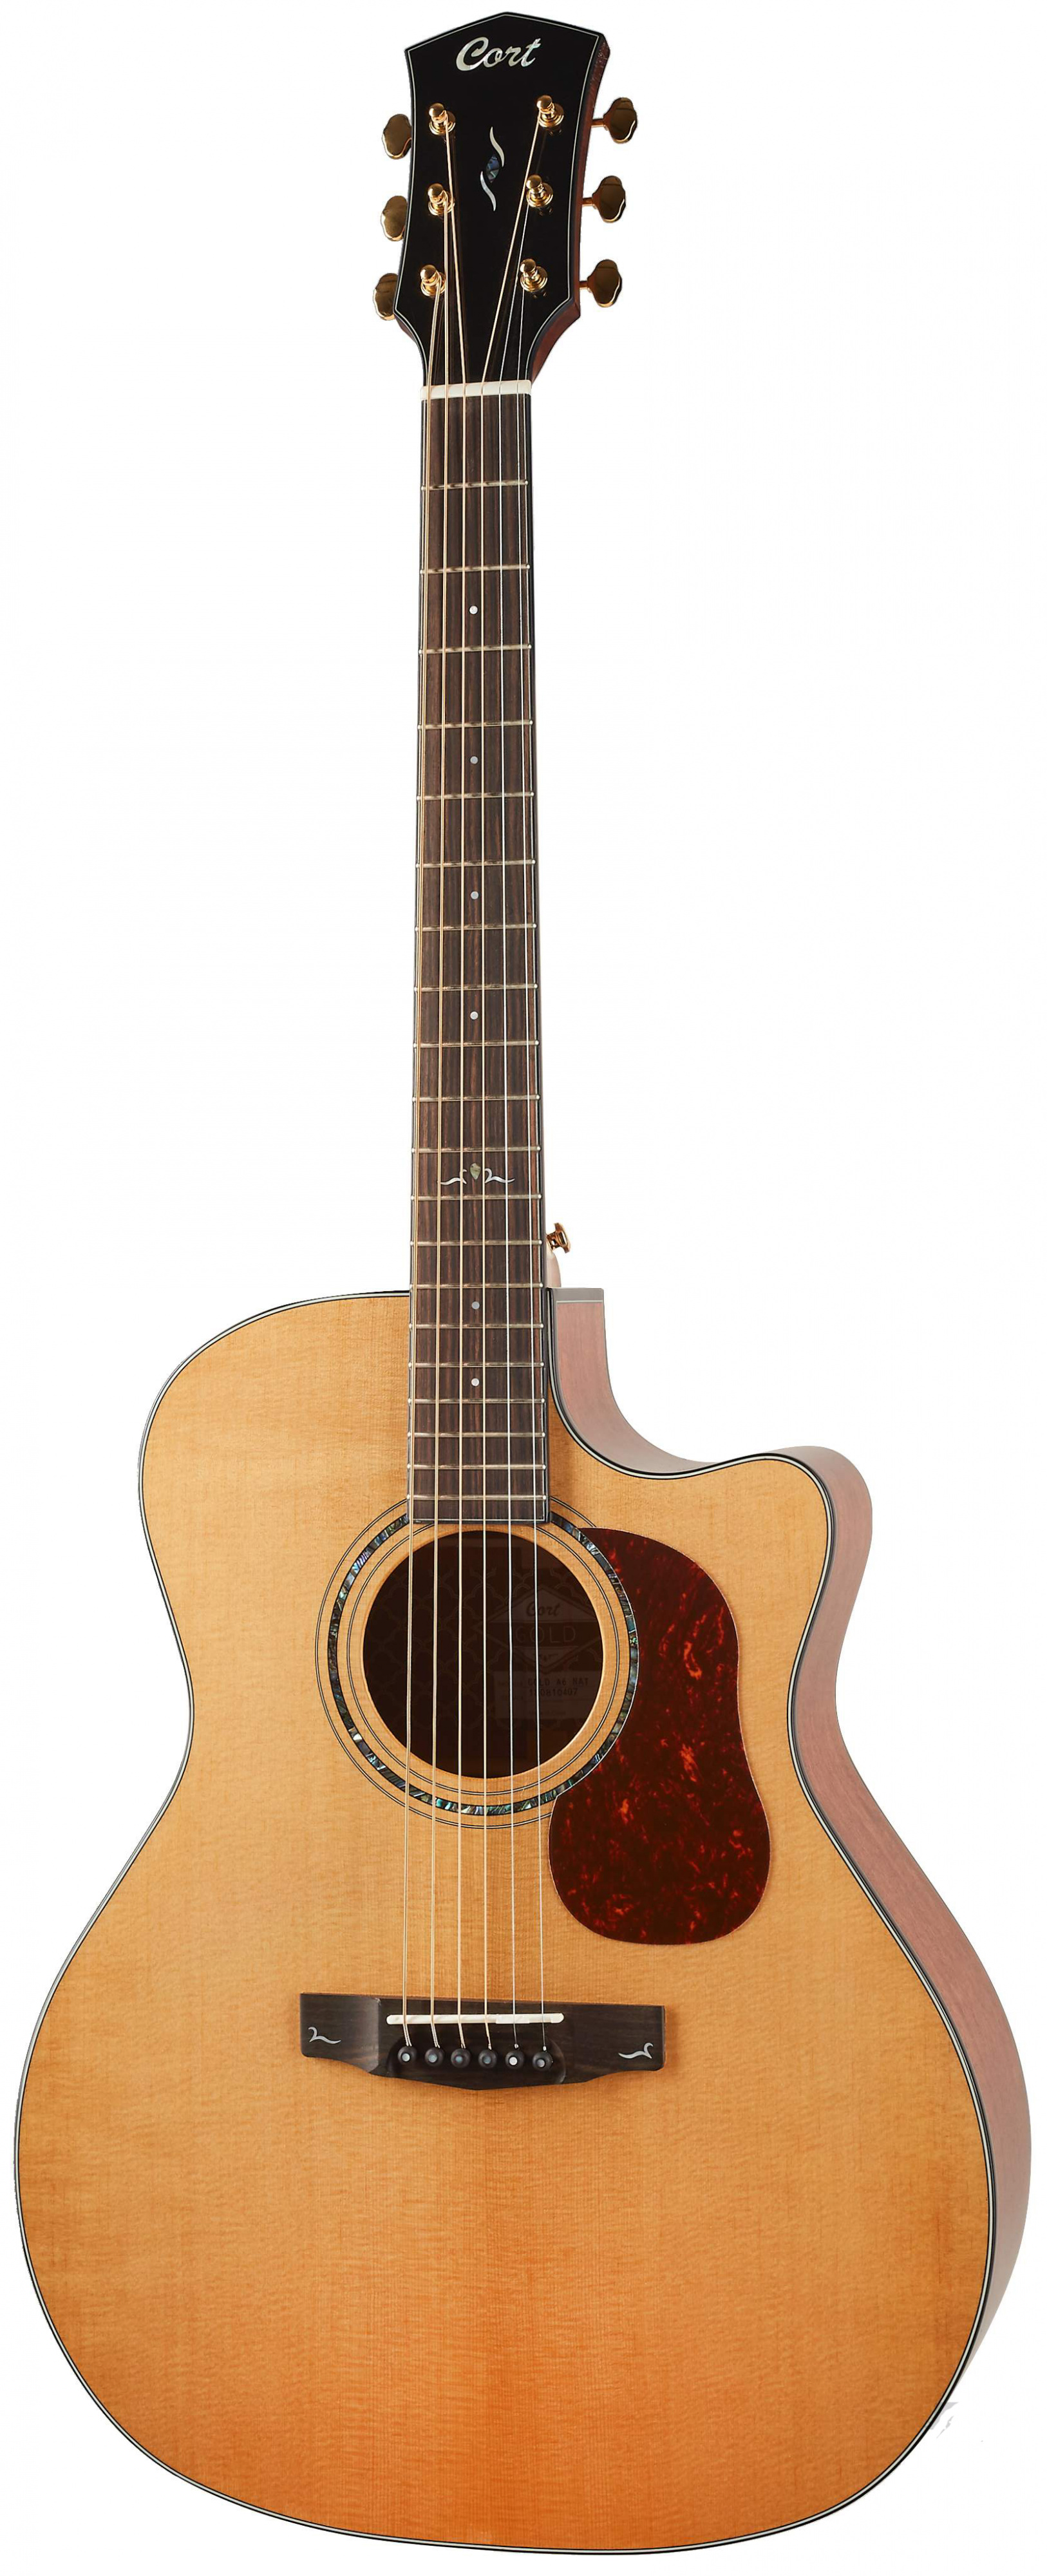 Электроакустические гитары Cort Gold-A6-WCASE-NAT электроакустические гитары cort gold a8 wcase lb чехол в комплекте